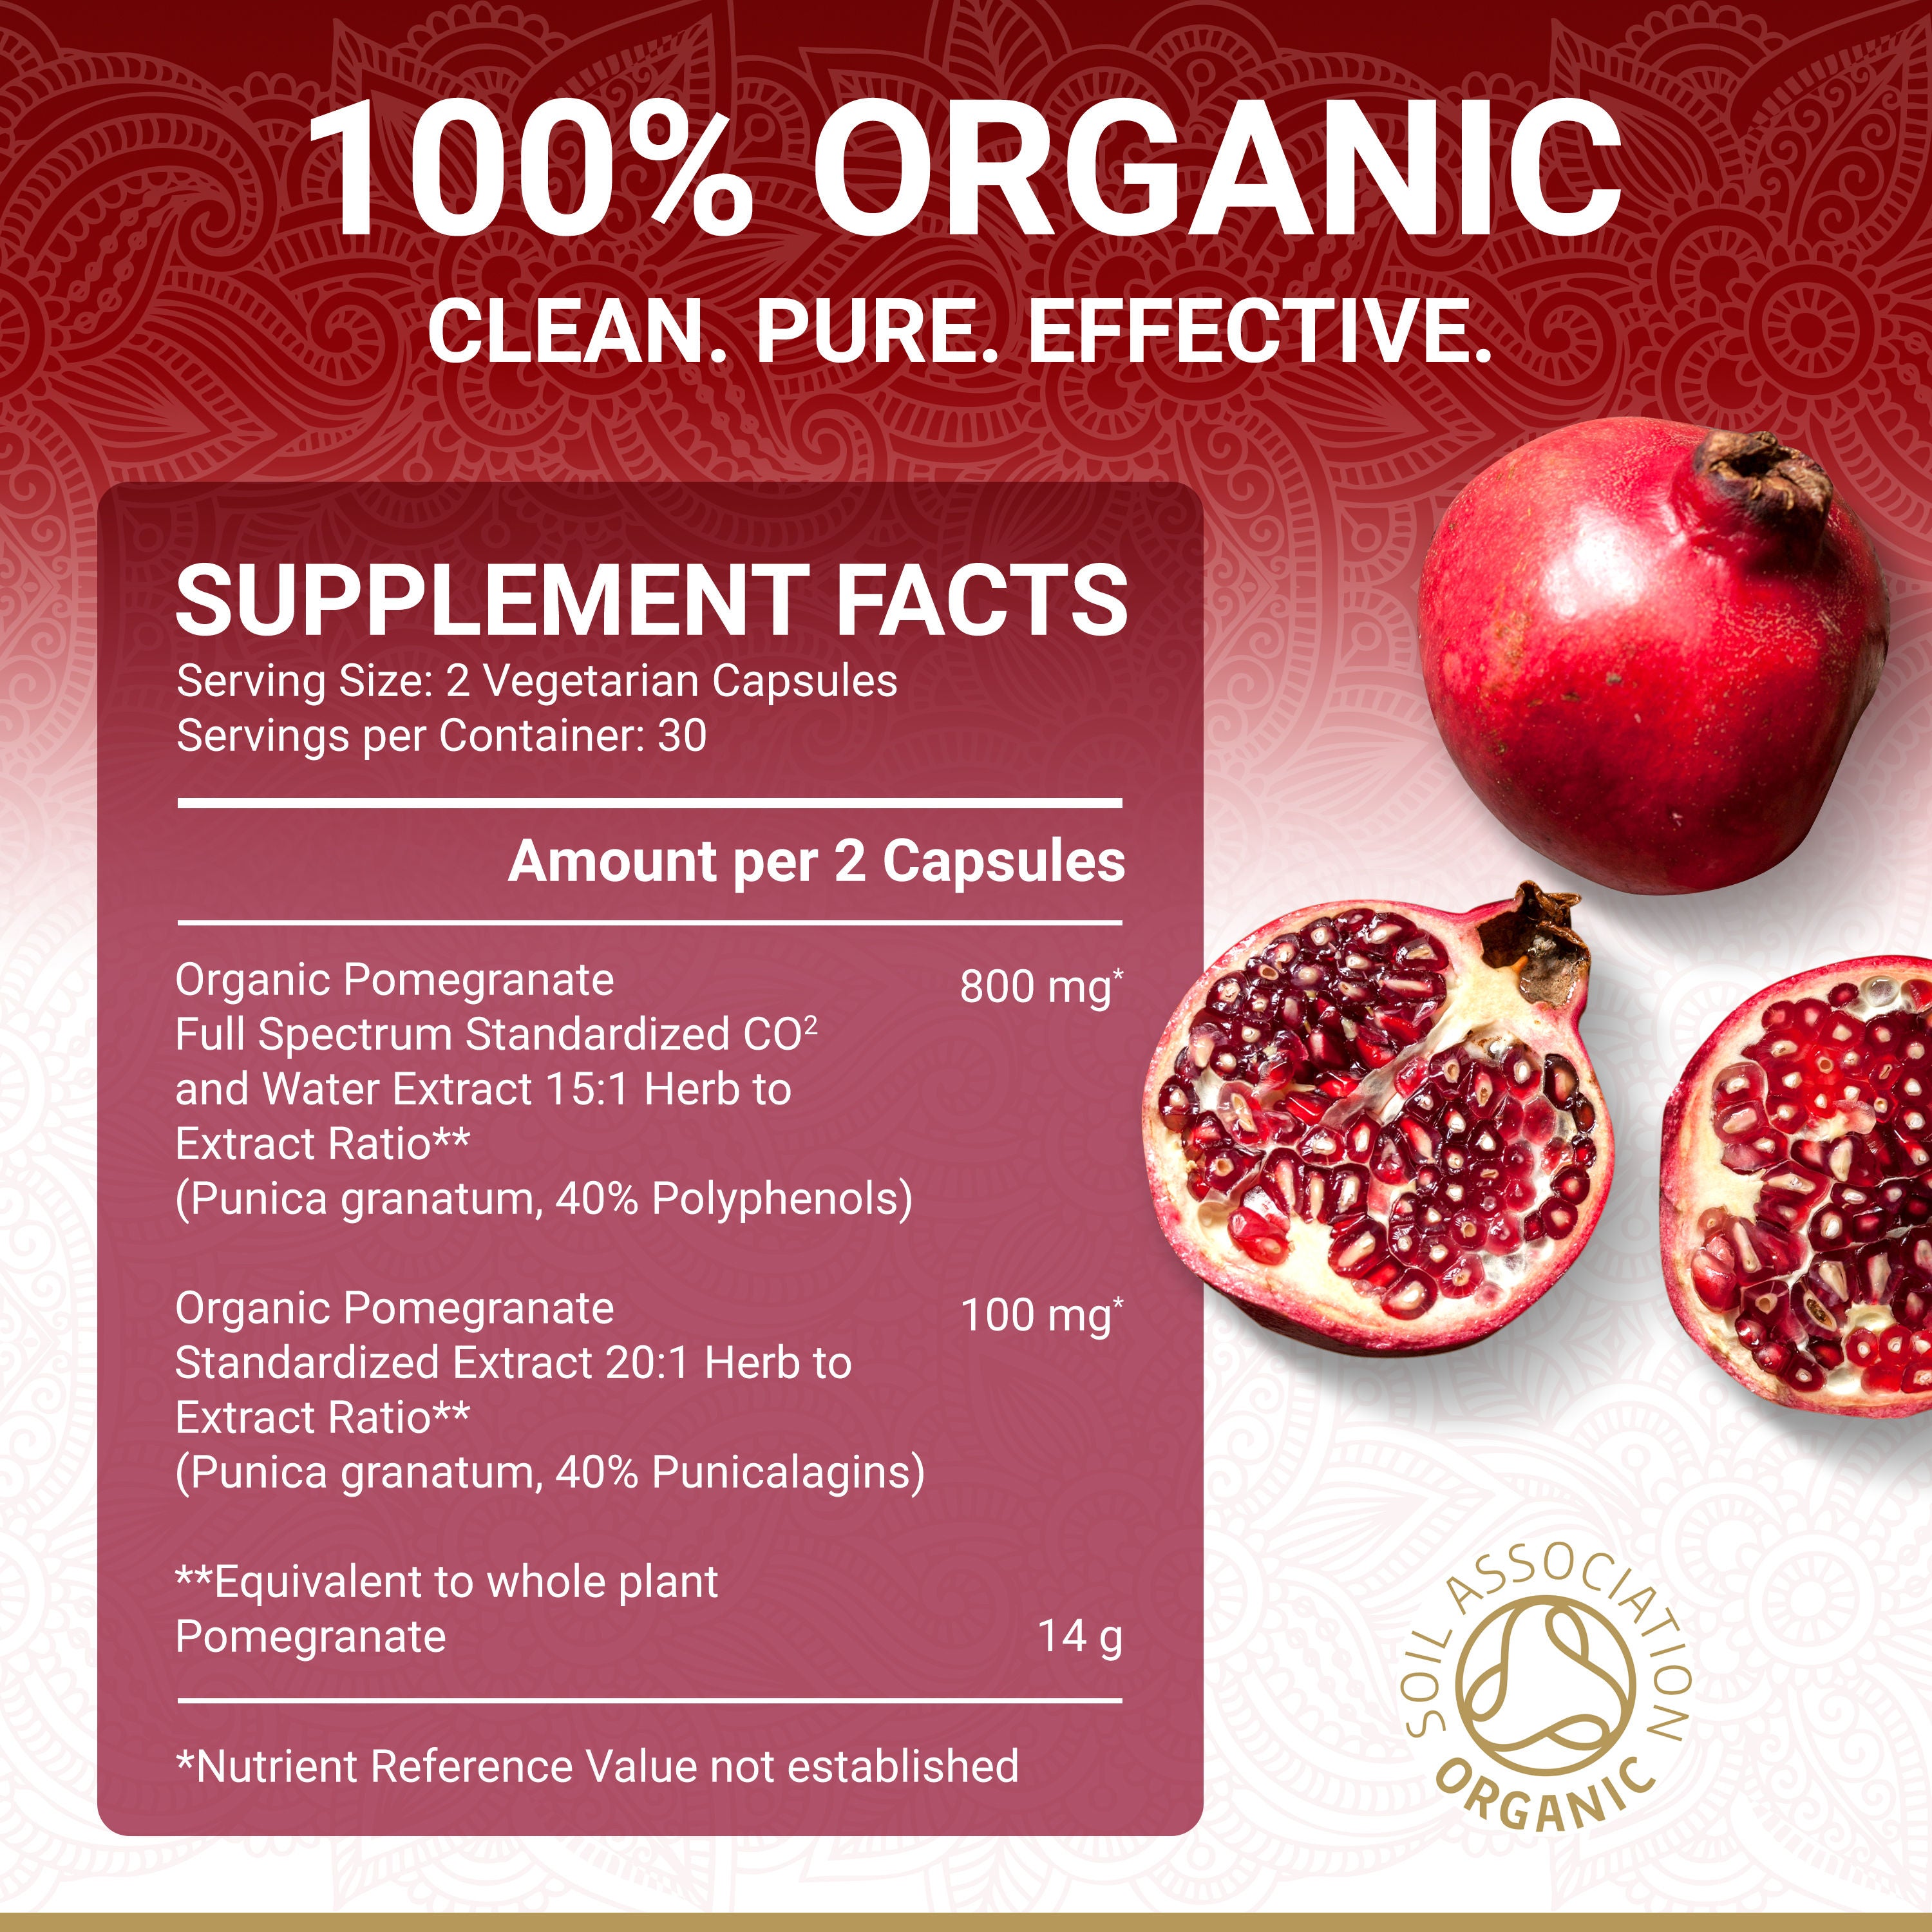 True Veda Organic Pomegranate Extract 180 Capsules (3 Bottles)